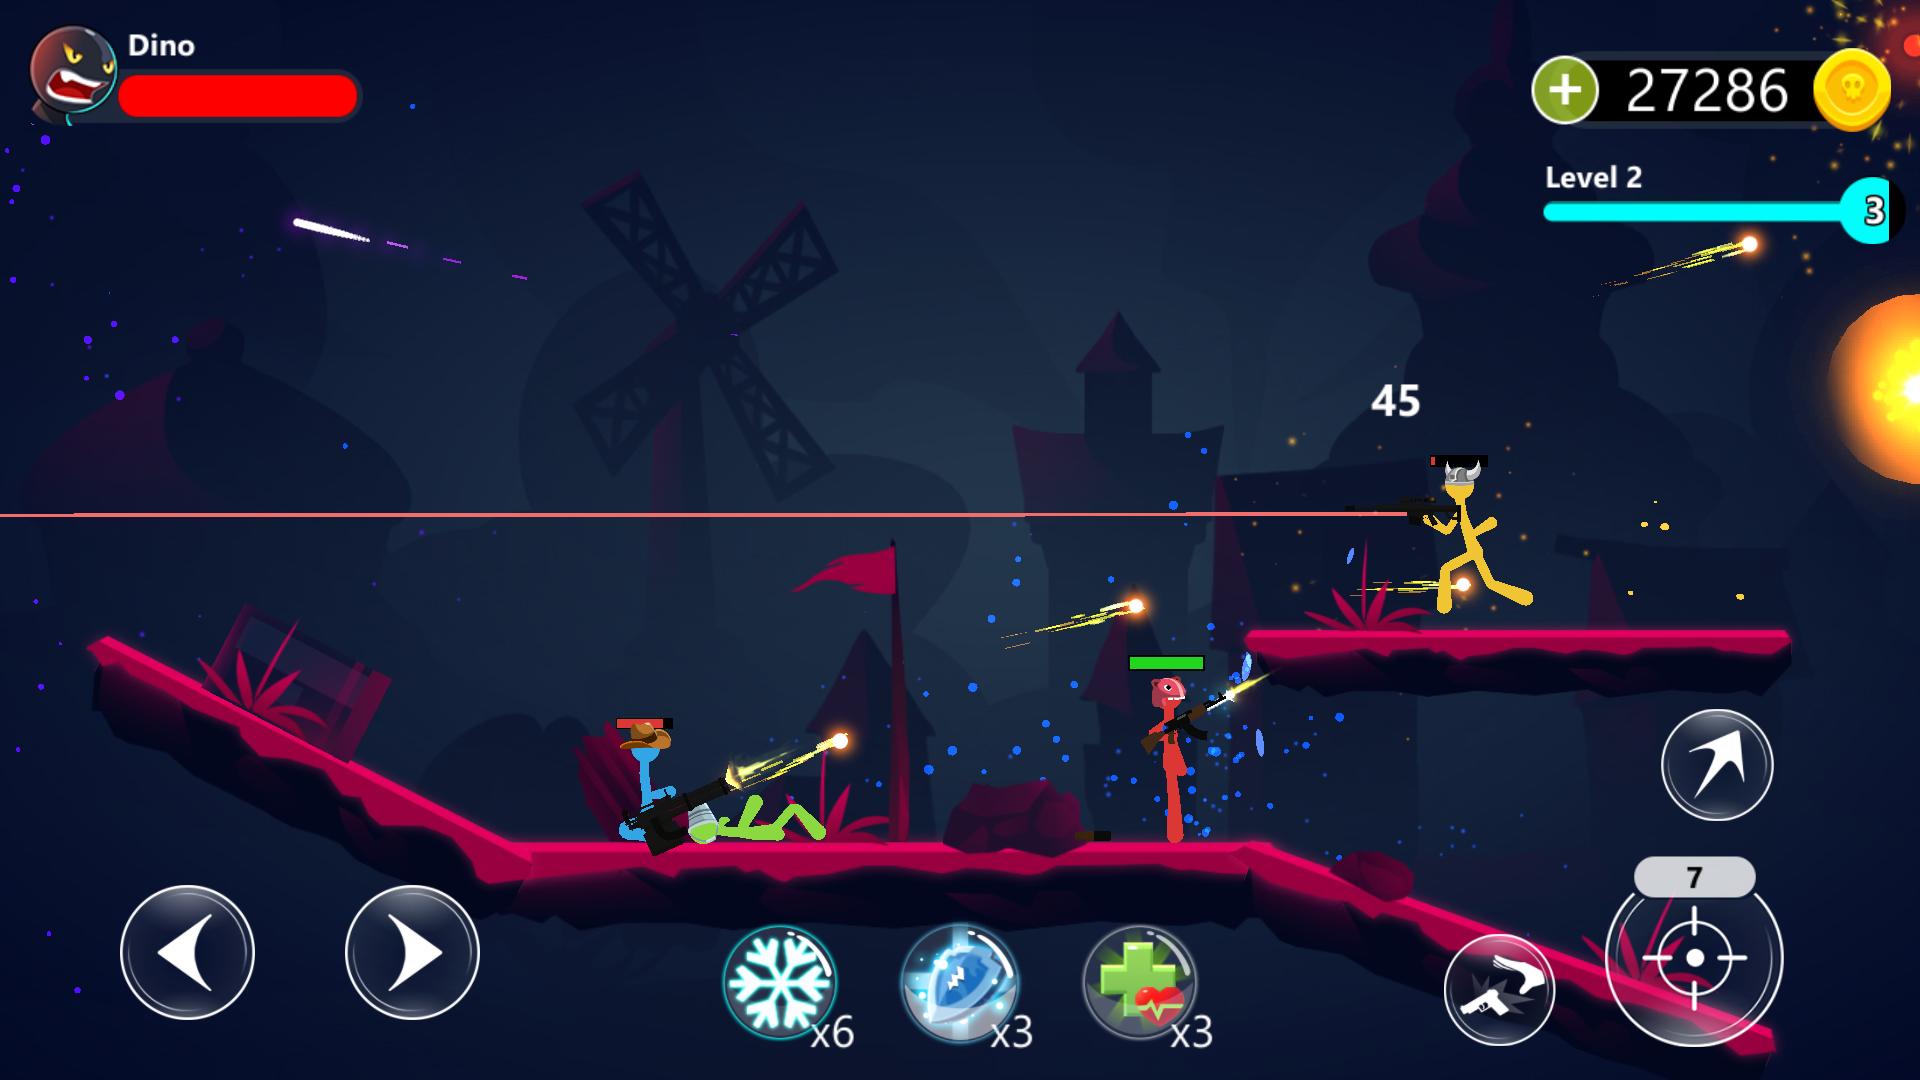 Stick Fight: Endless Battle APK (Android Game) - Tải miễn phí